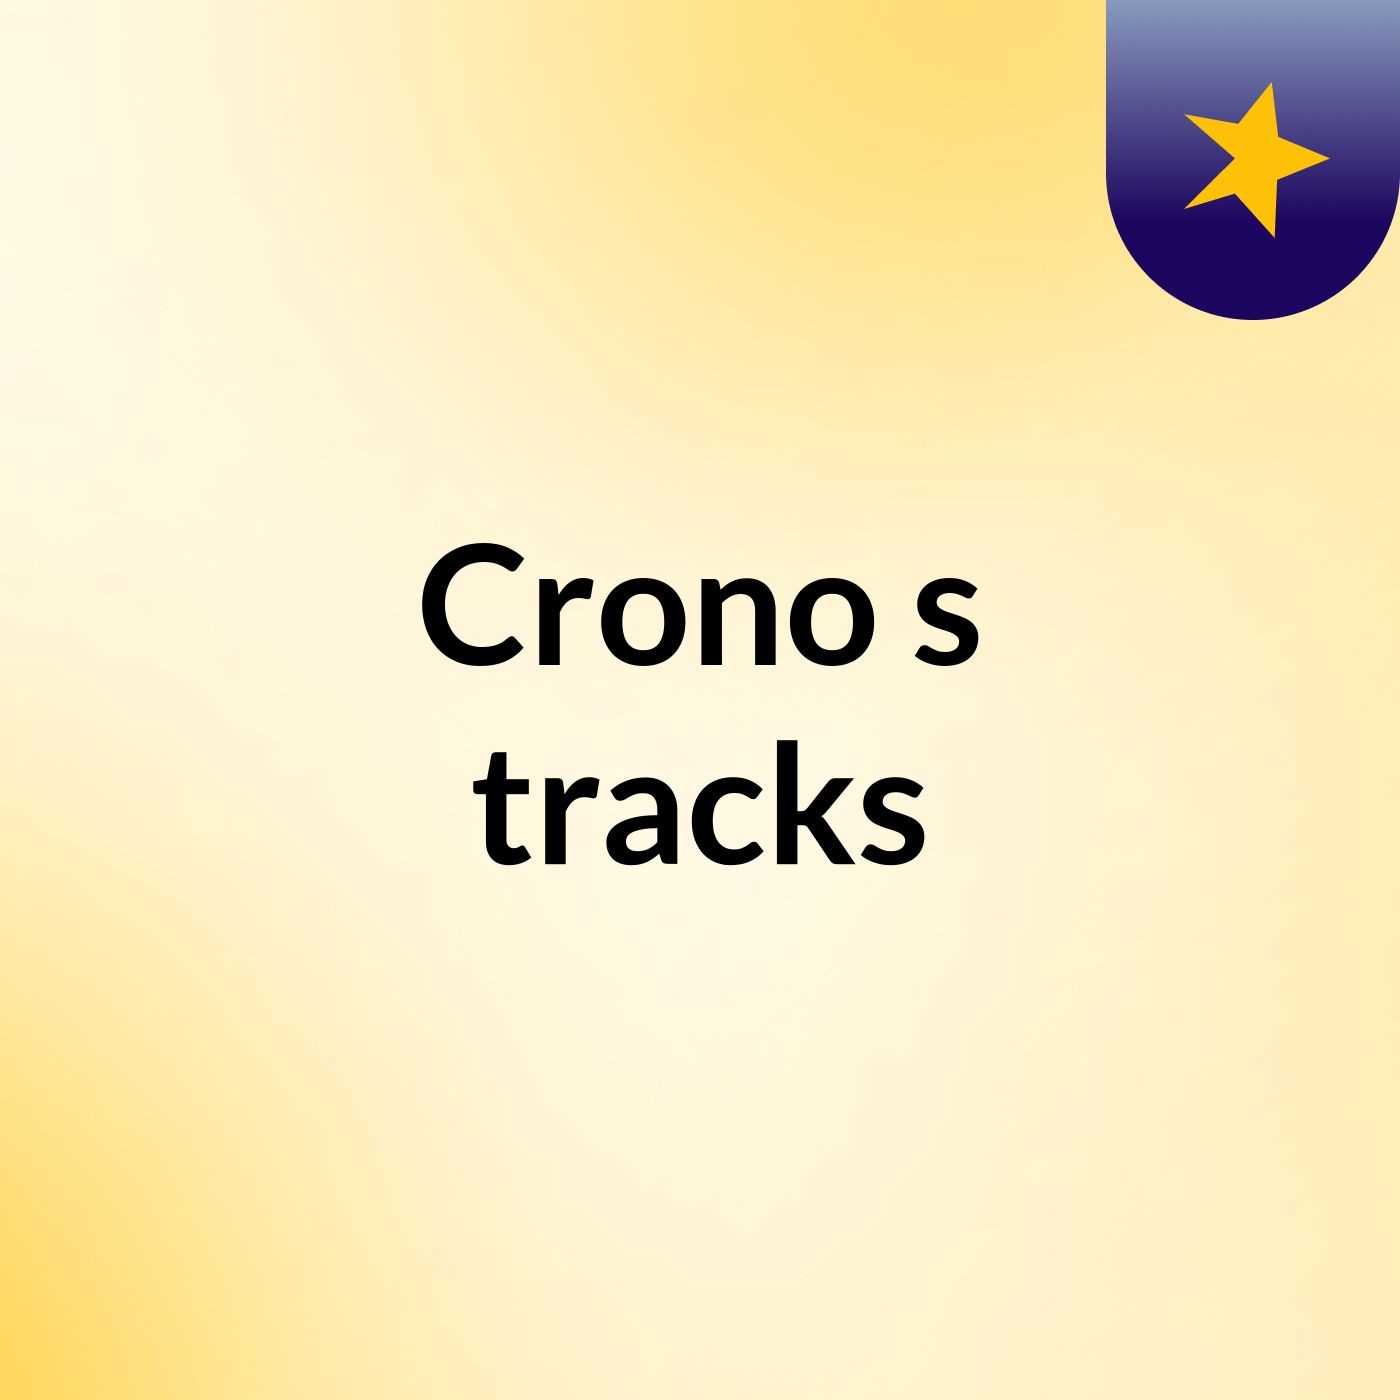 Crono's tracks